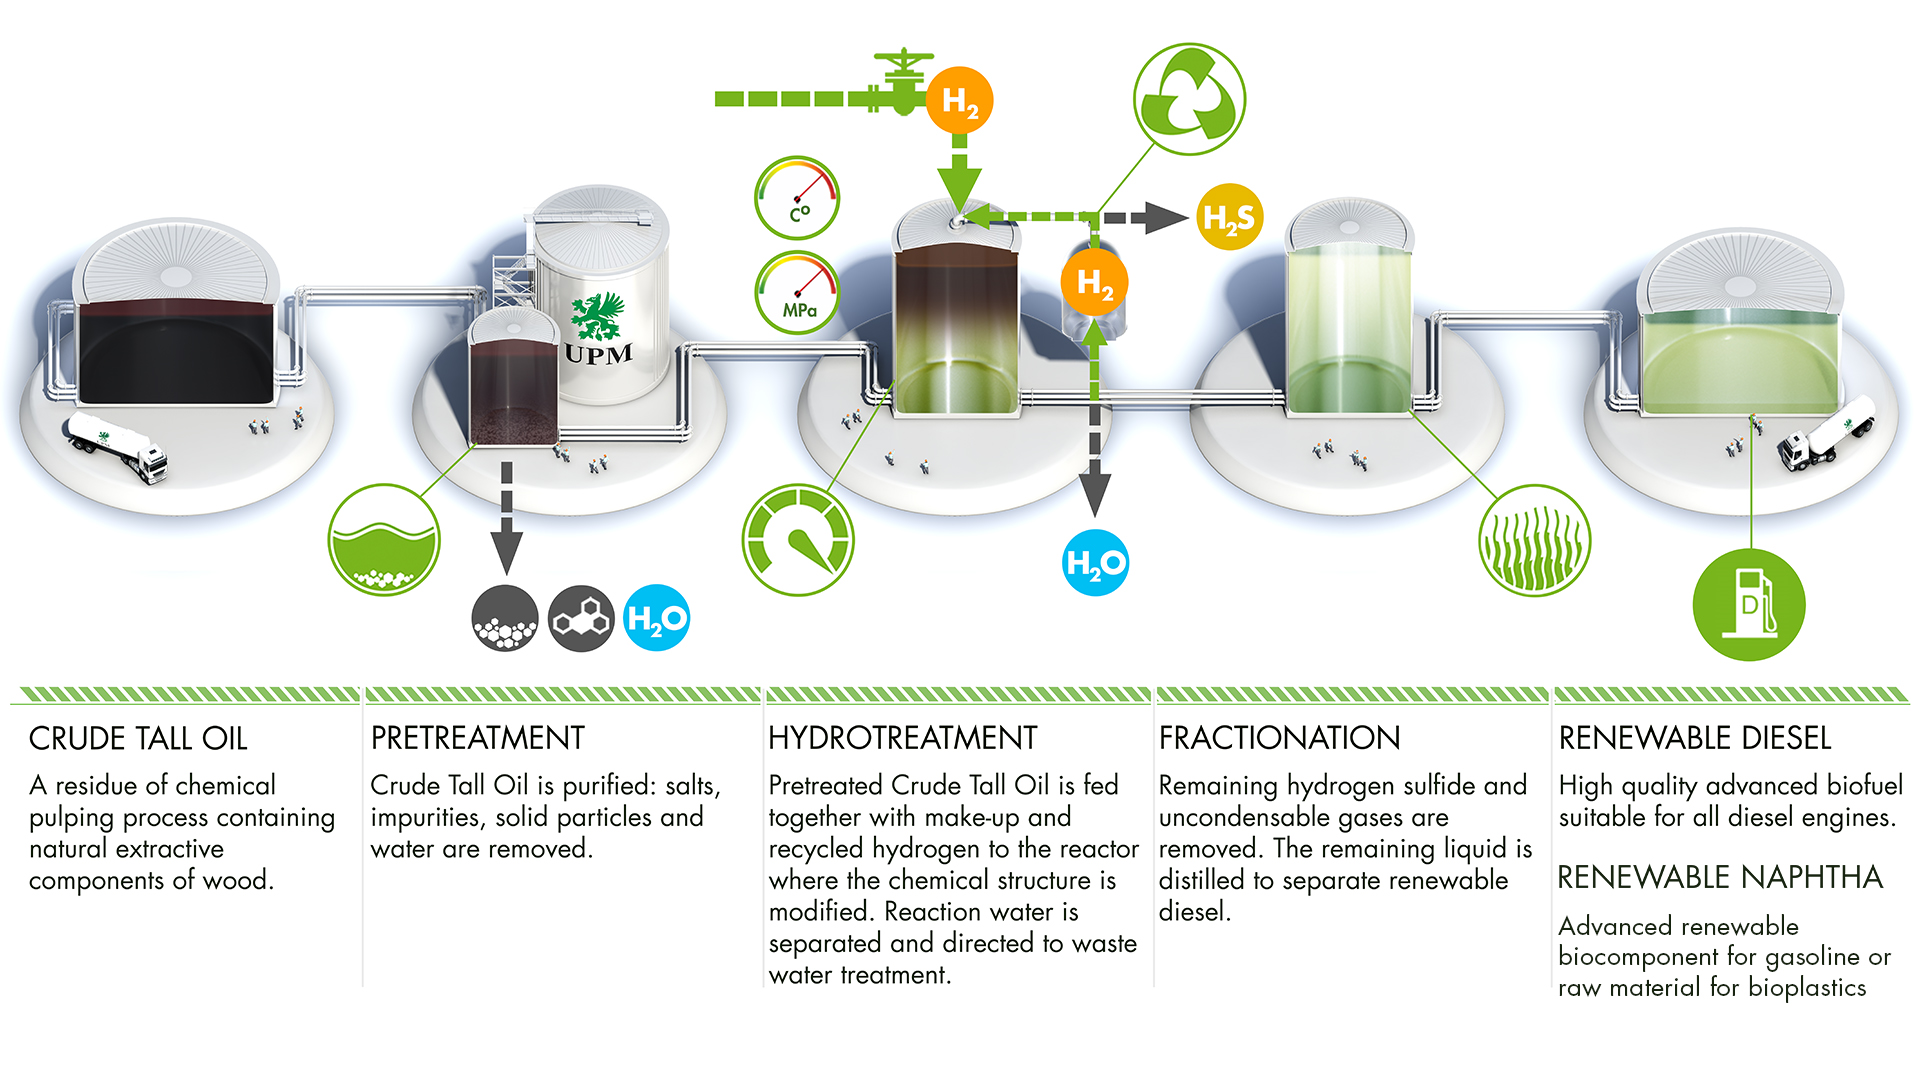 UPM_Biofuels_process_en.jpg